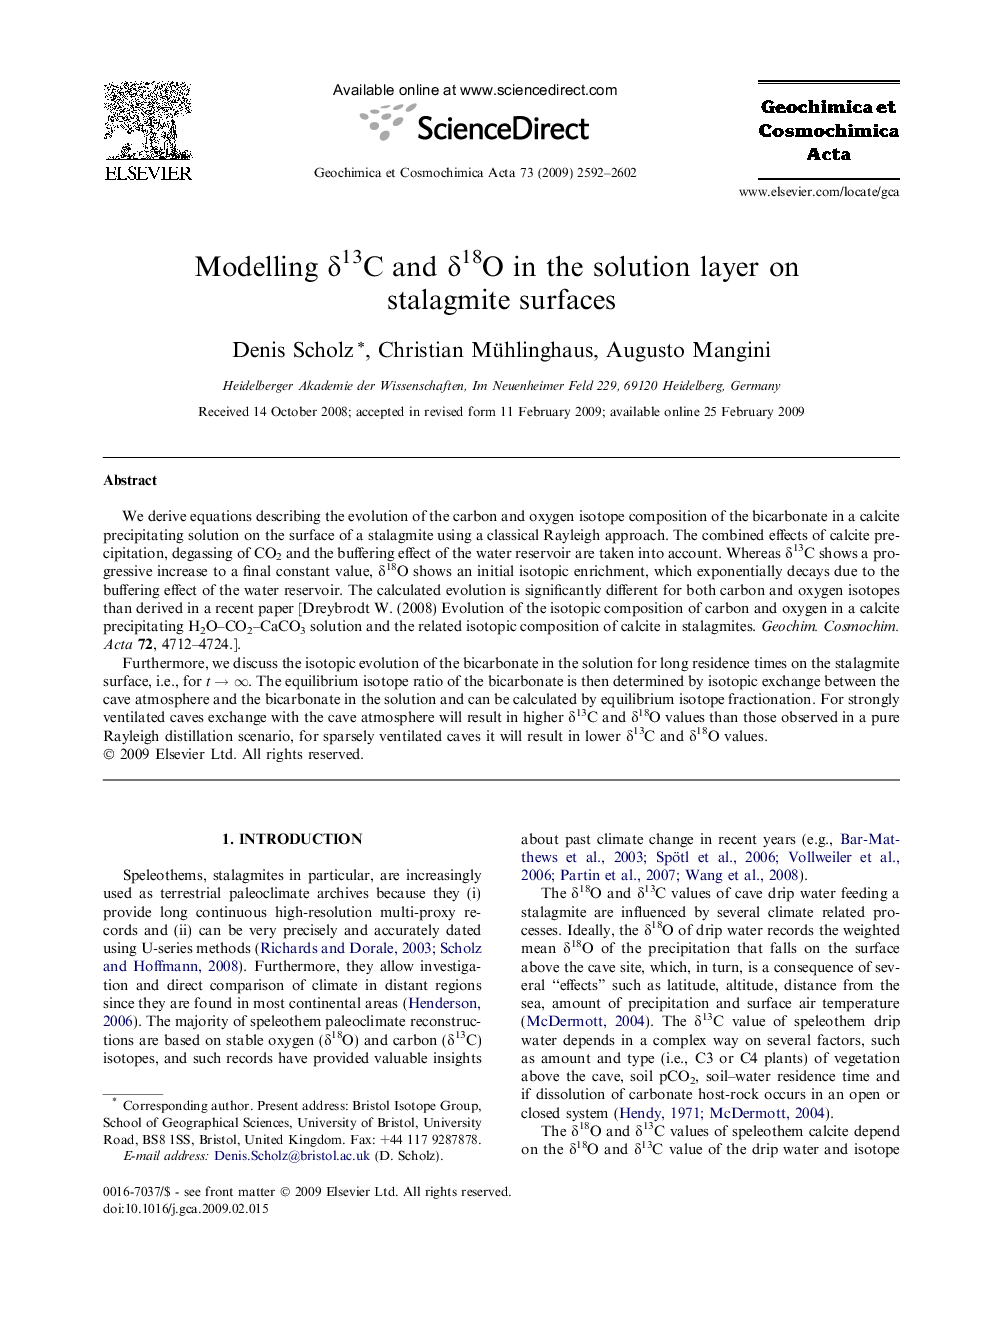 Modelling δ13C and δ18O in the solution layer on stalagmite surfaces